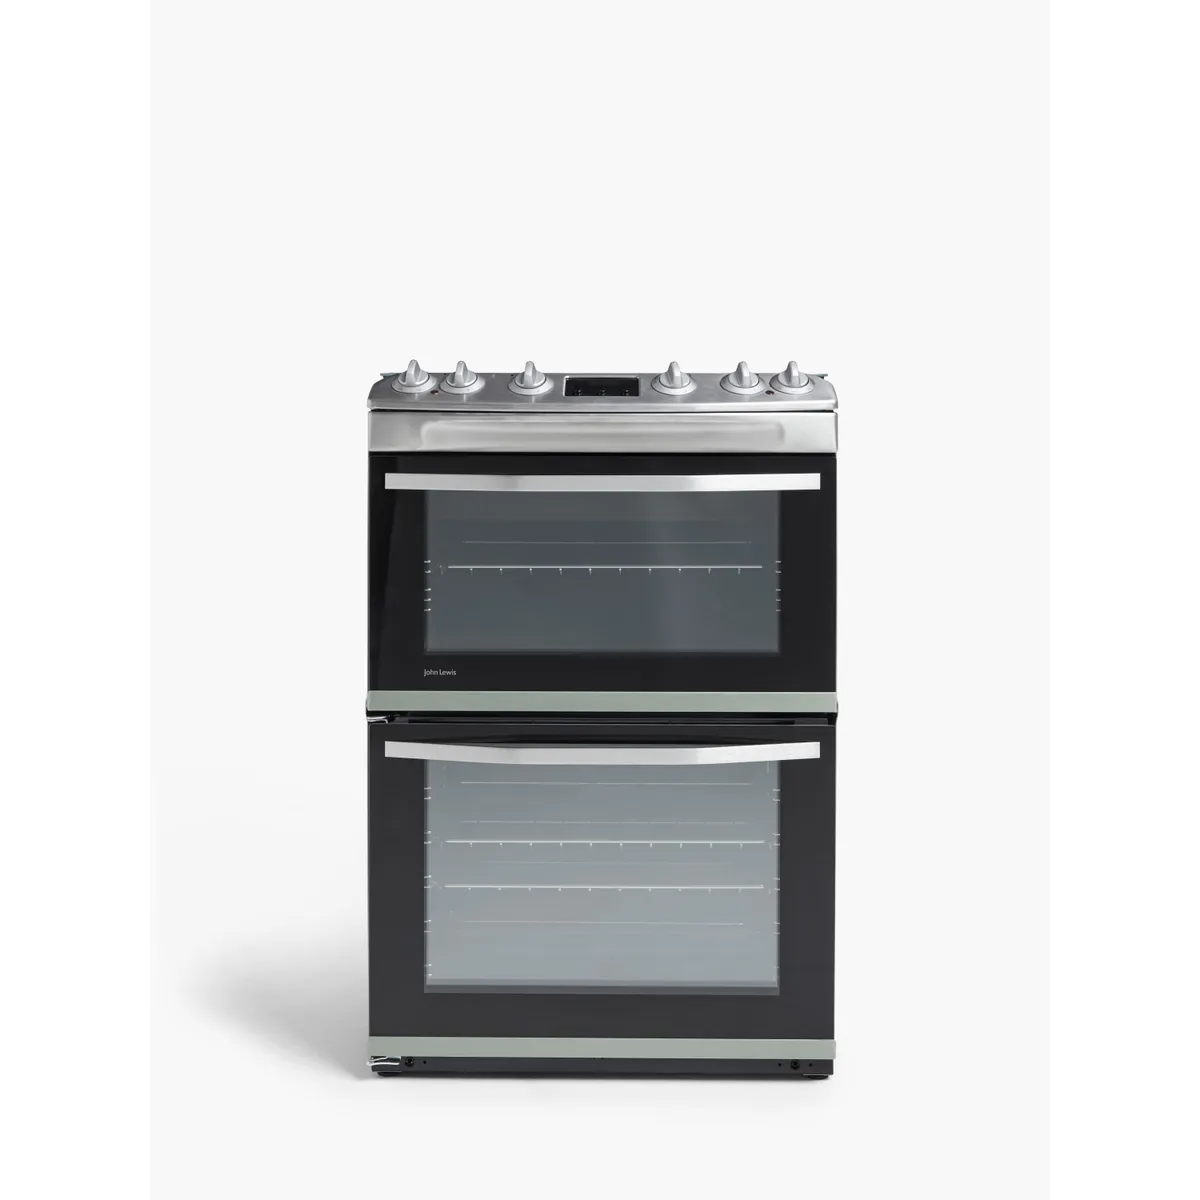 Best cookers uk: JLFSMC621 double dual fuel cooker in Silver